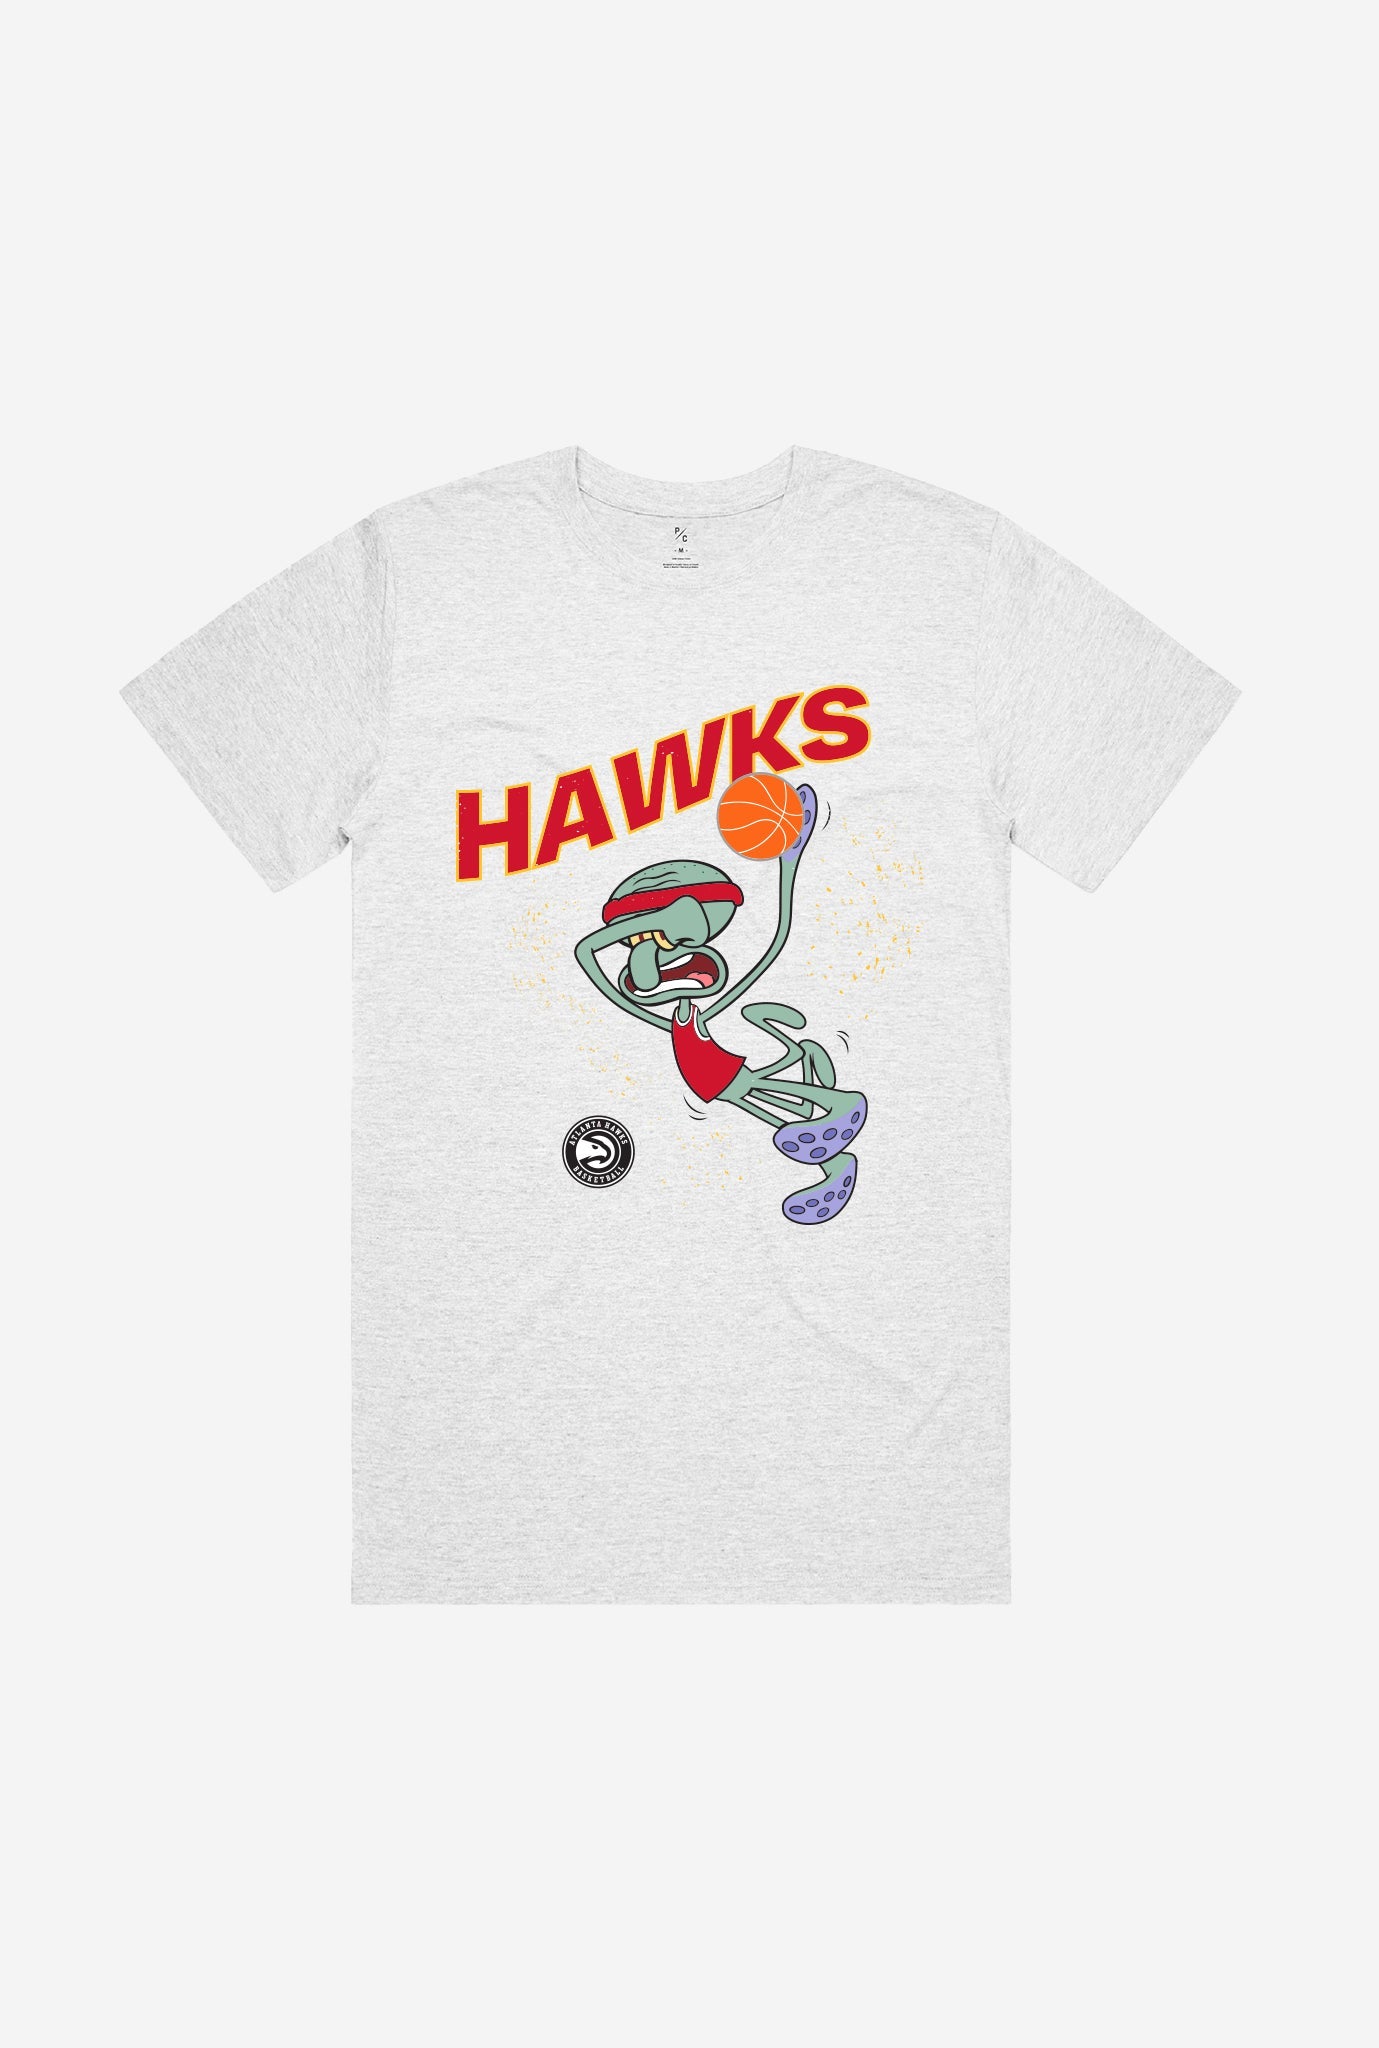 Atlanta Hawks Squidward T-Shirt - Ash